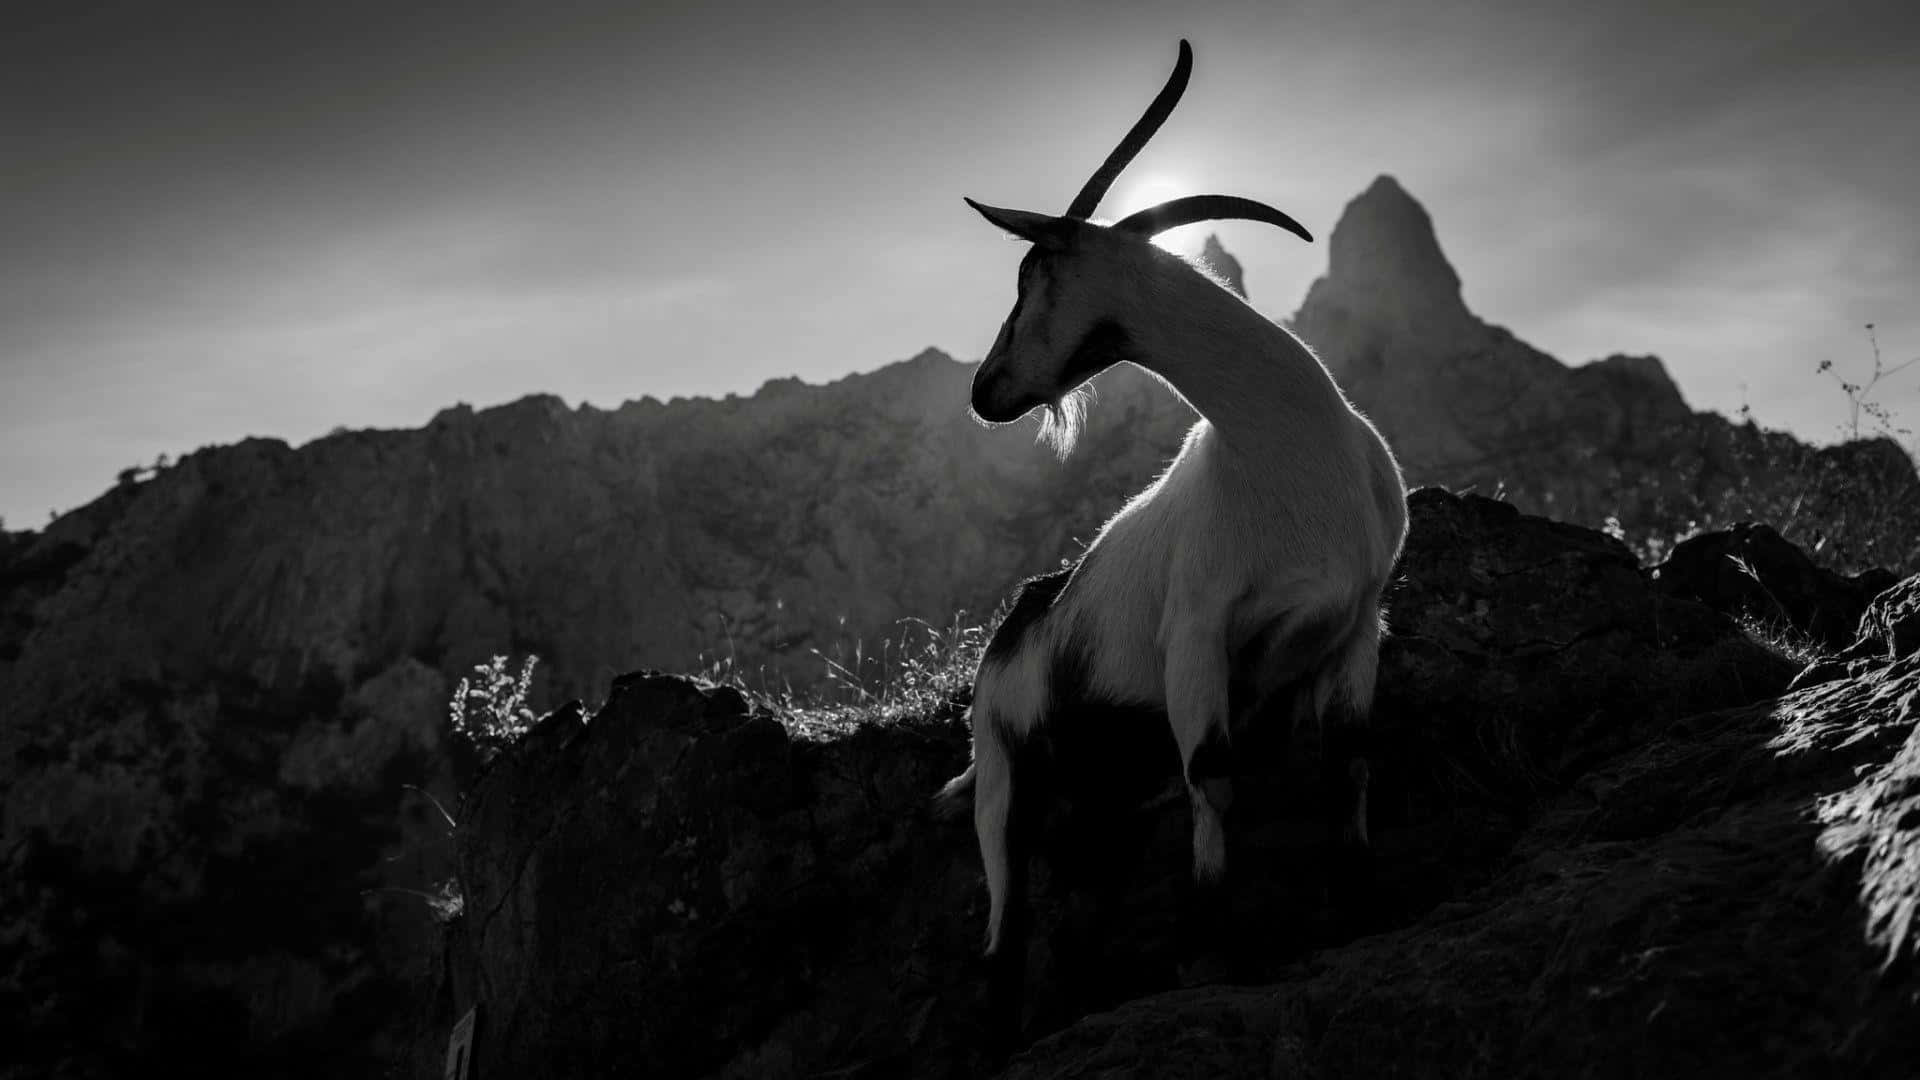 An up-close photograph of a wild Mountain Goat.